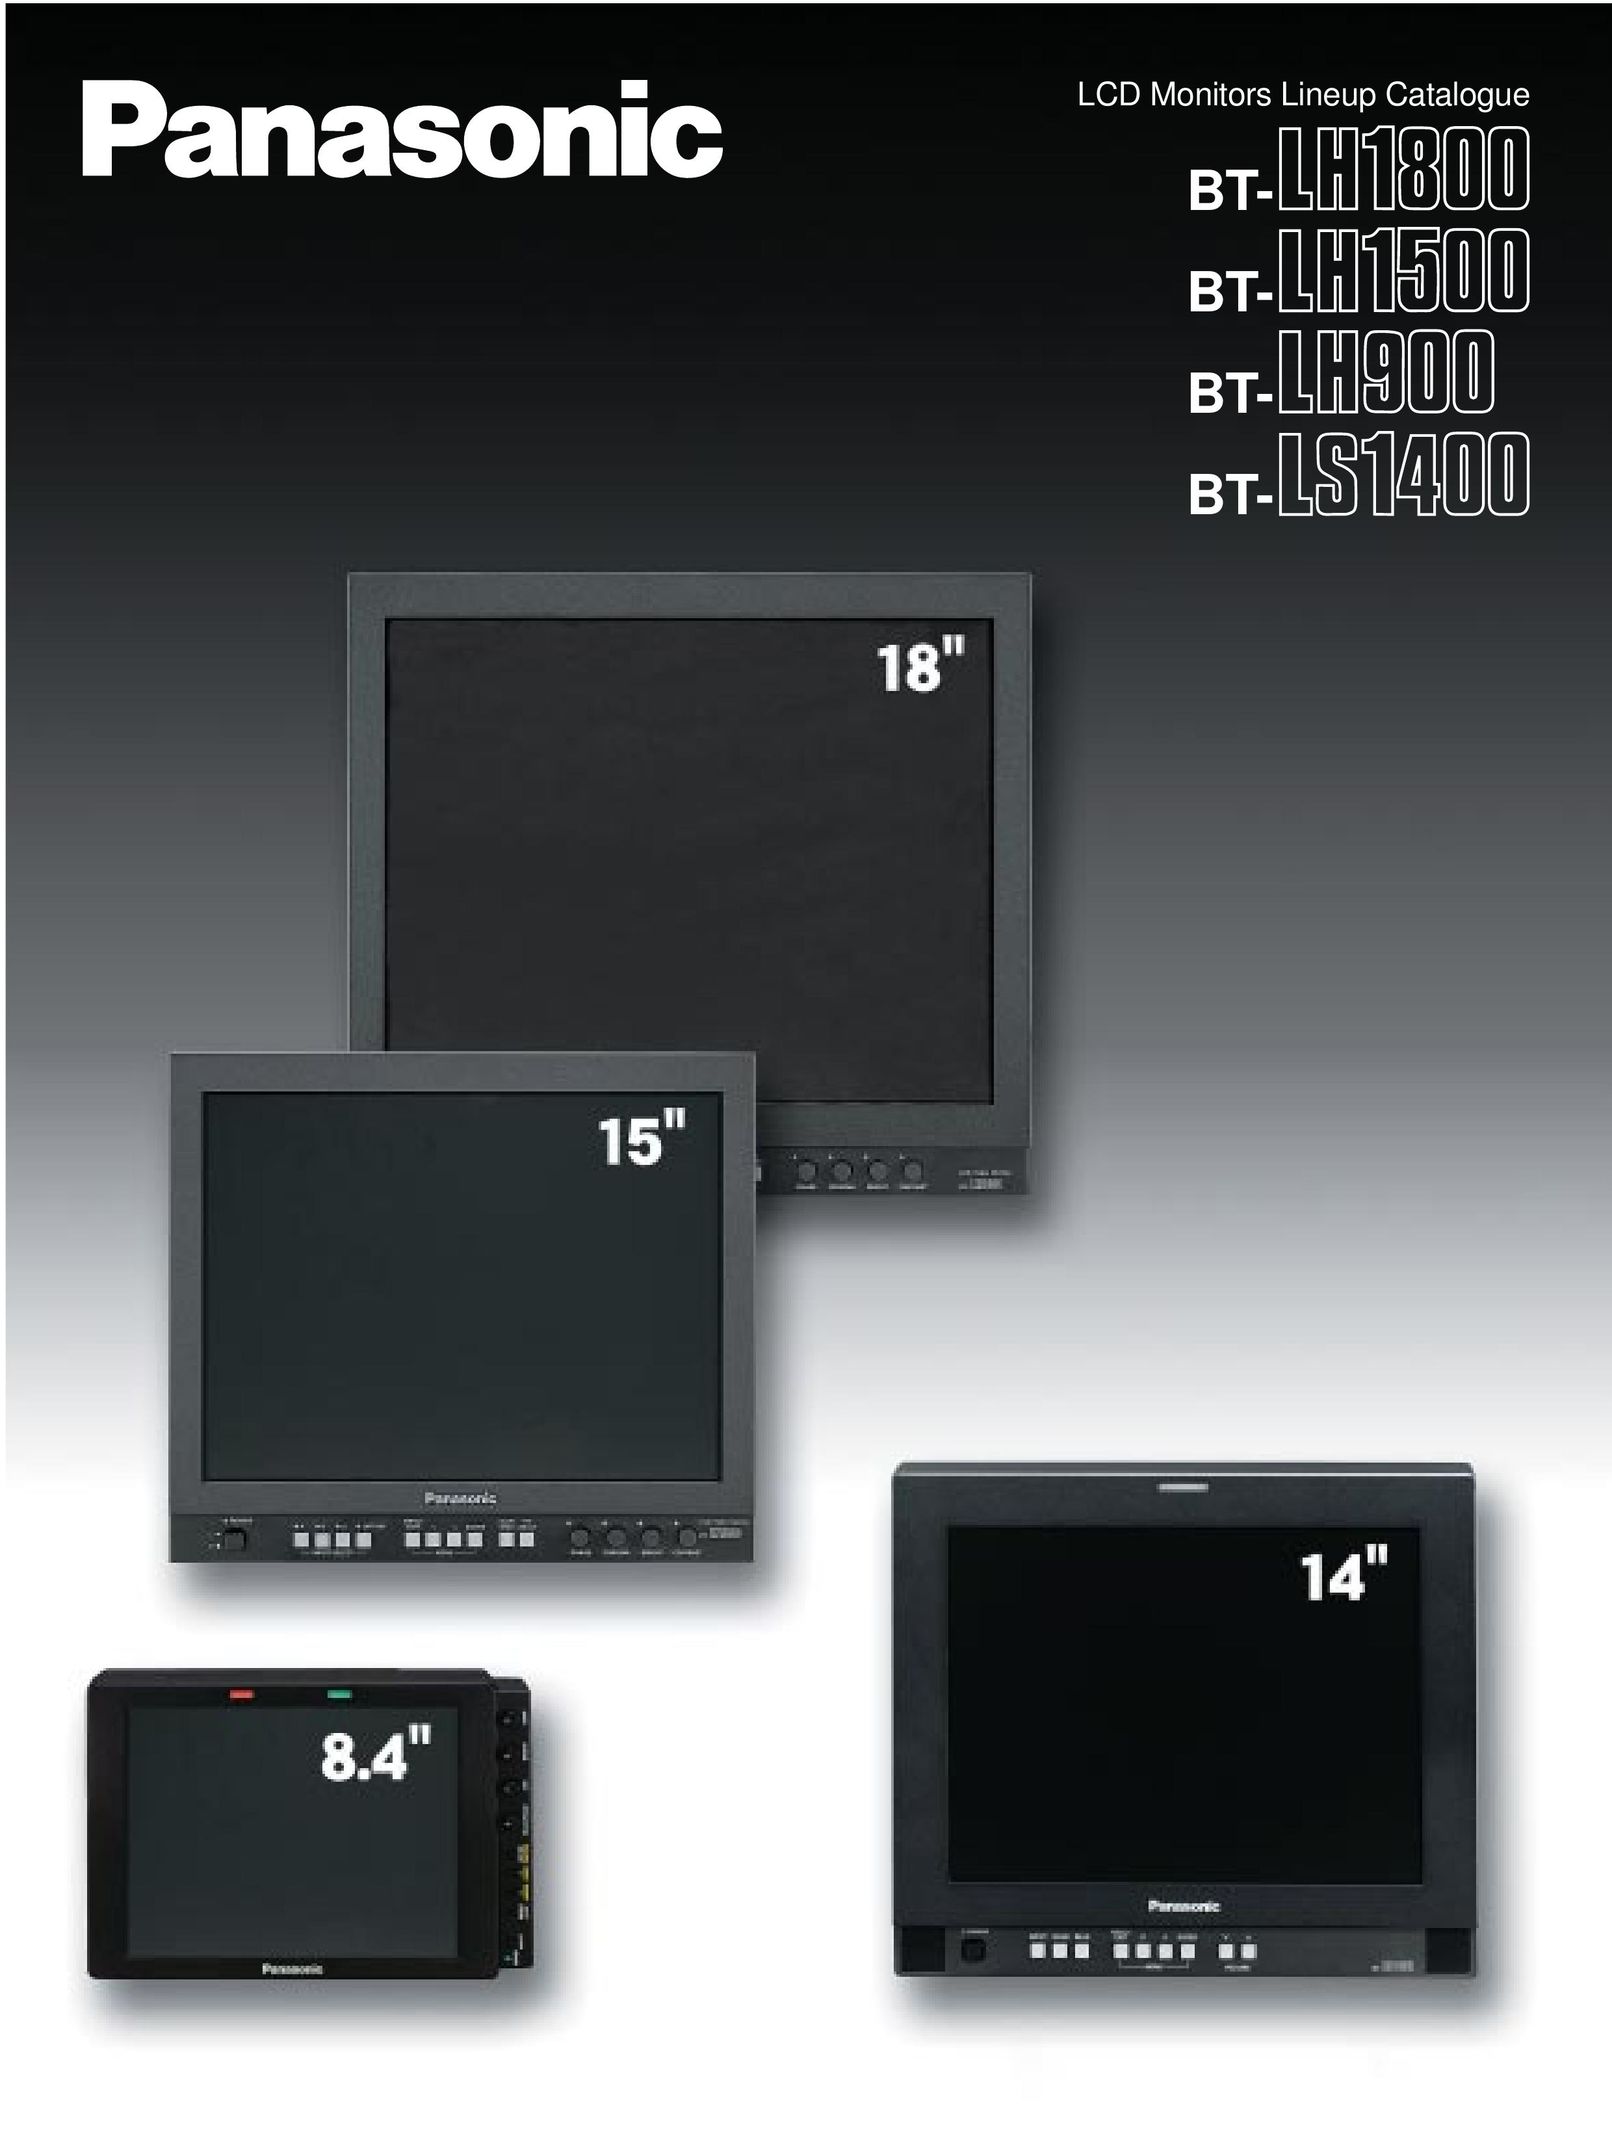 Panasonic BT-LH1800 Computer Monitor User Manual